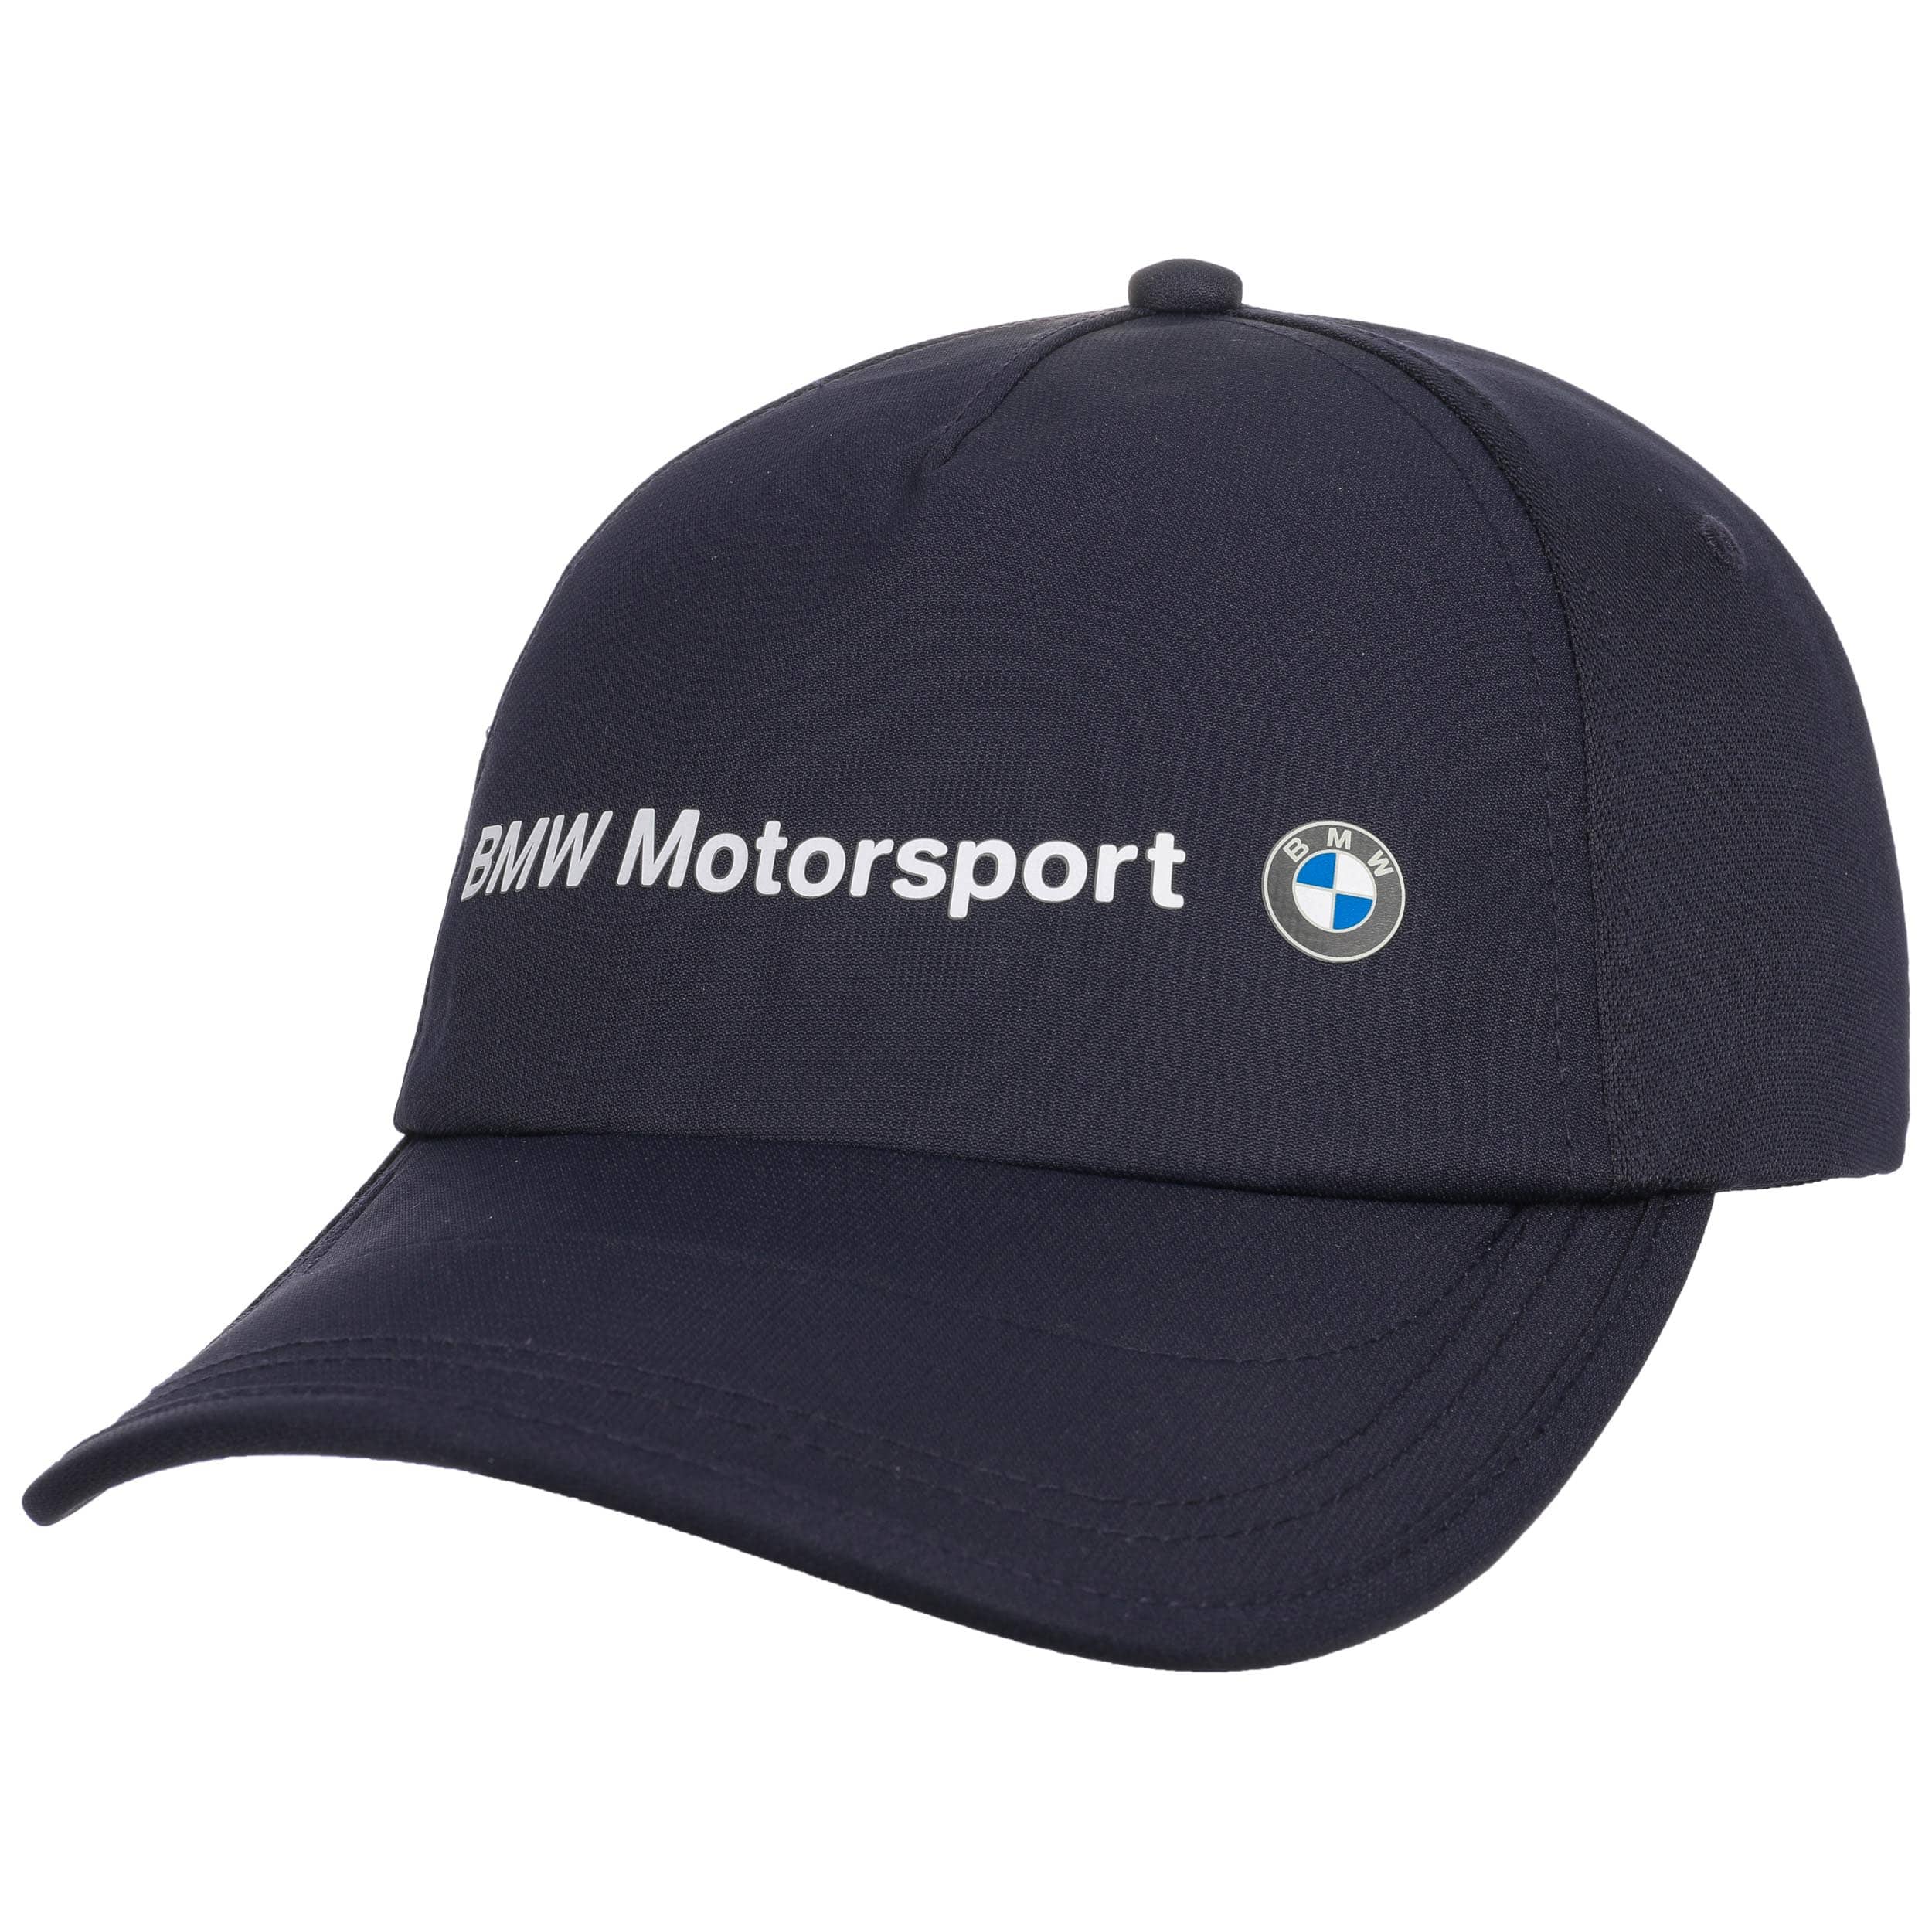 puma motorsport caps